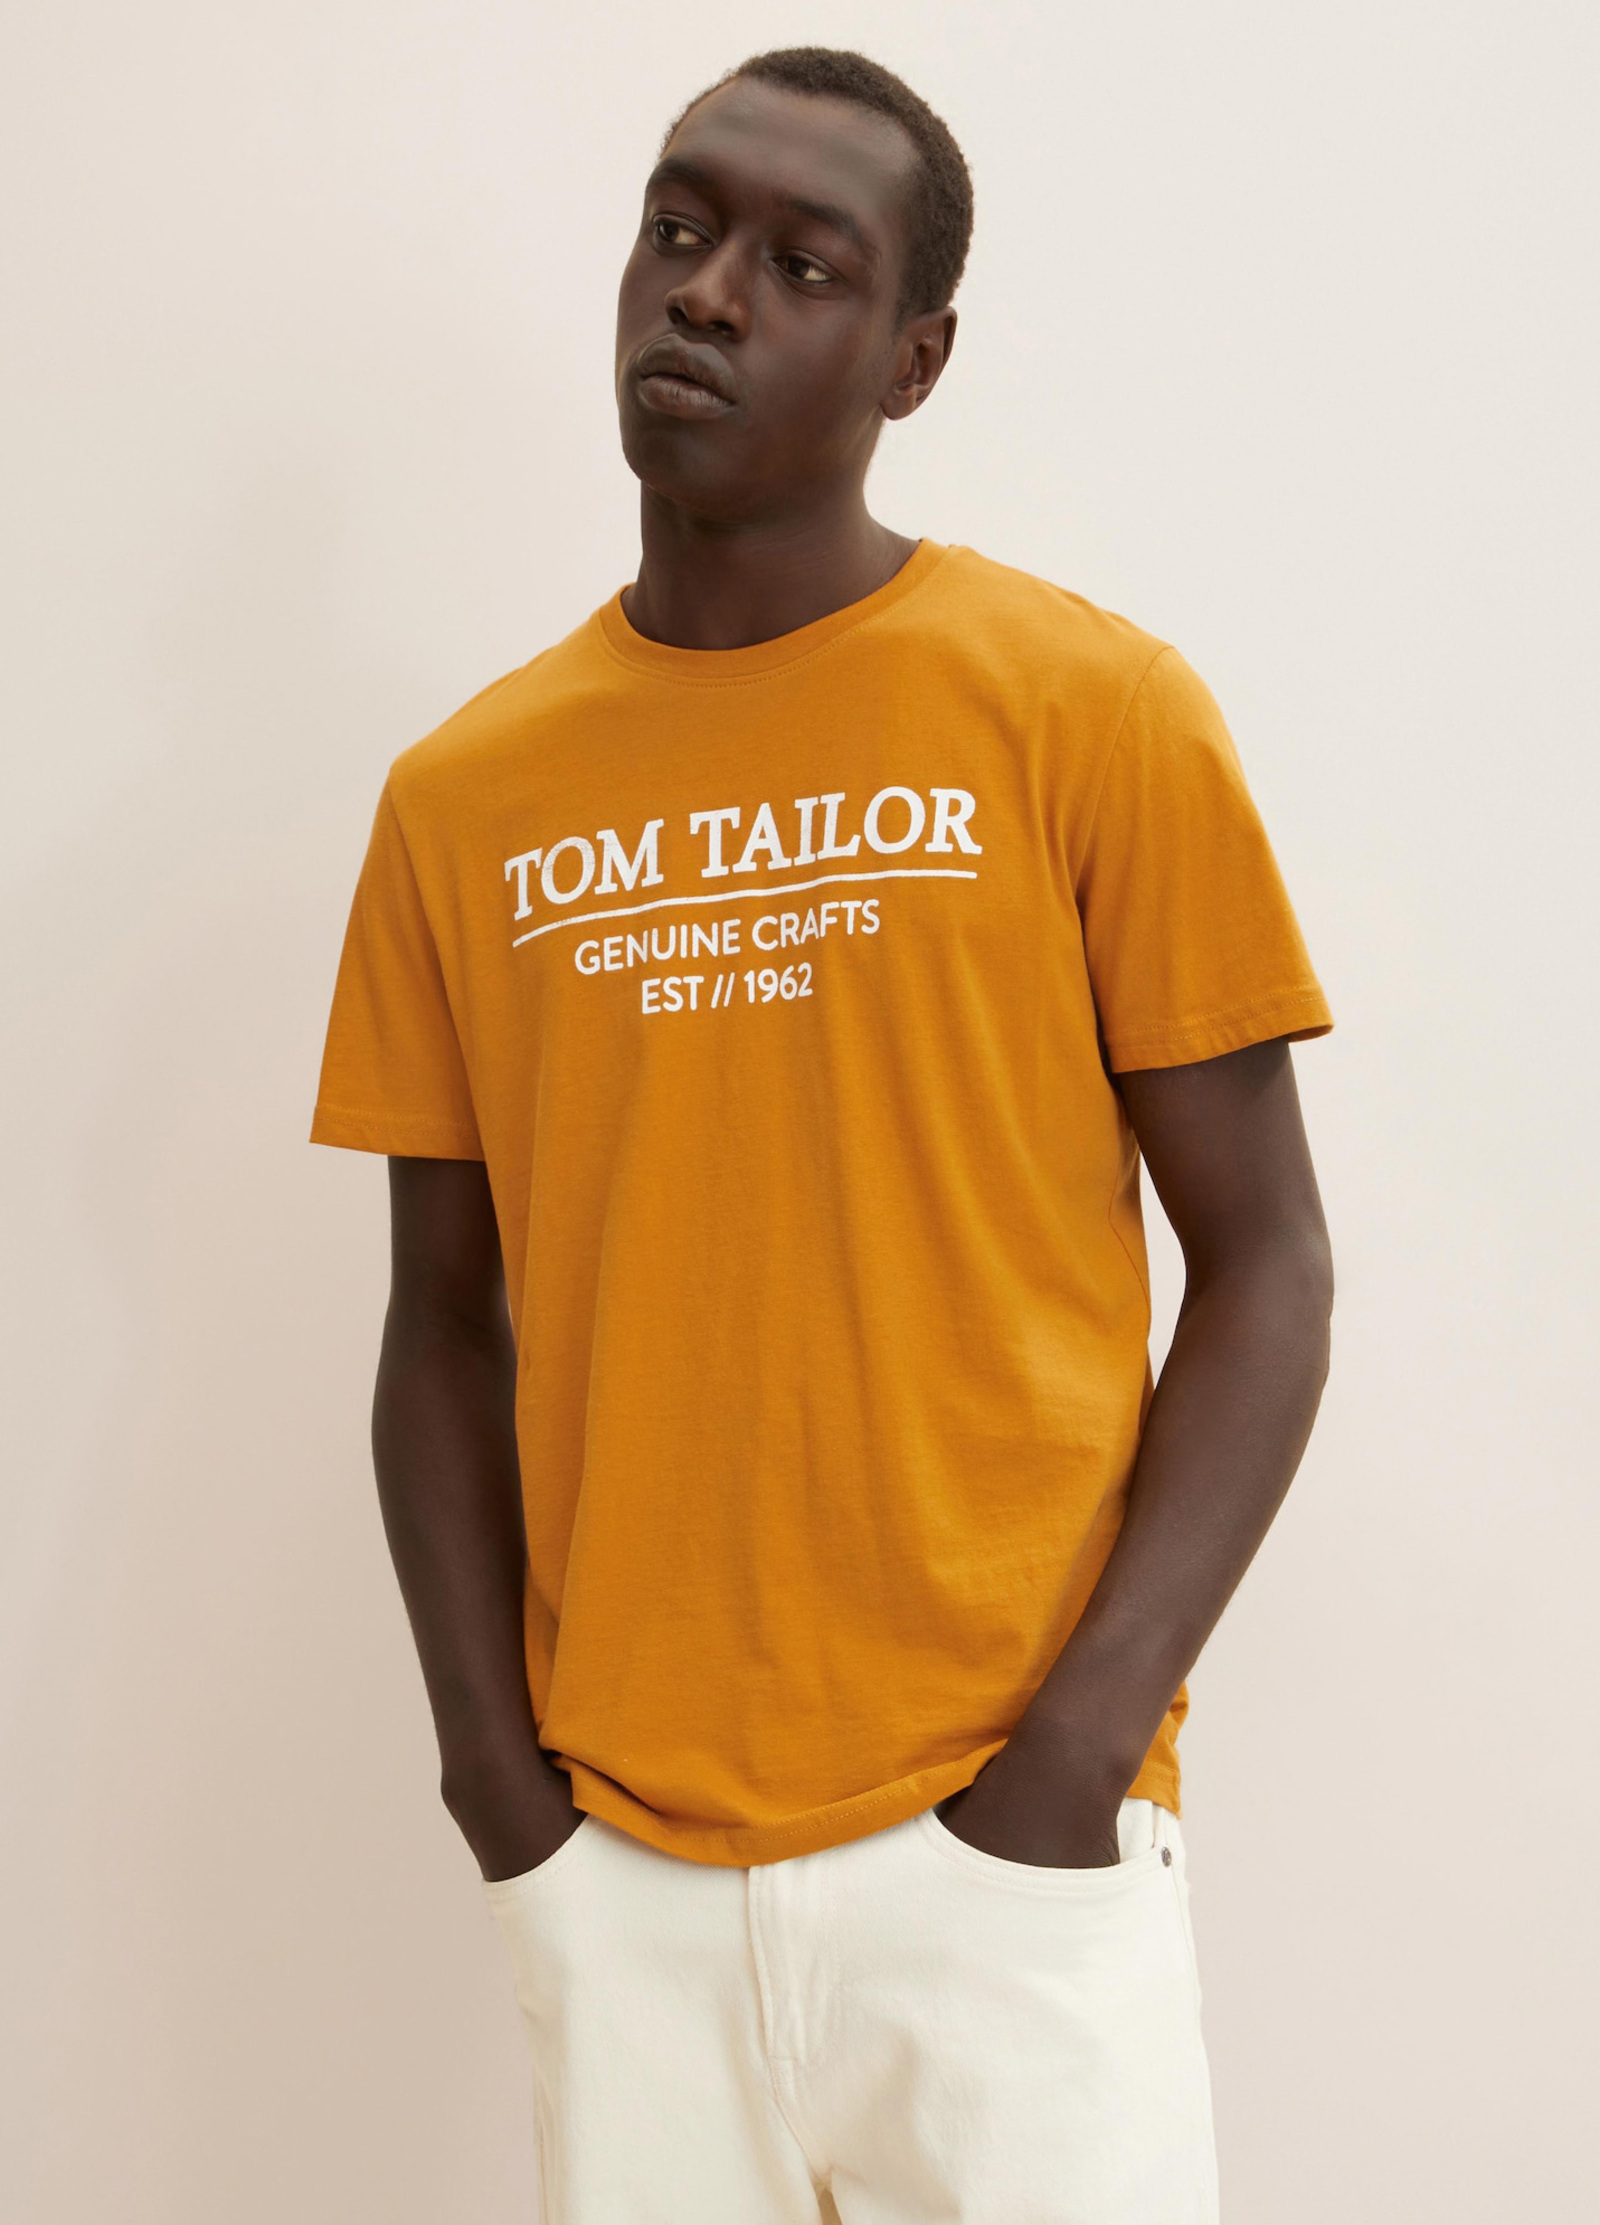 Tom Tailor® T-shirt Logo - Peanut L Butter Brown Size